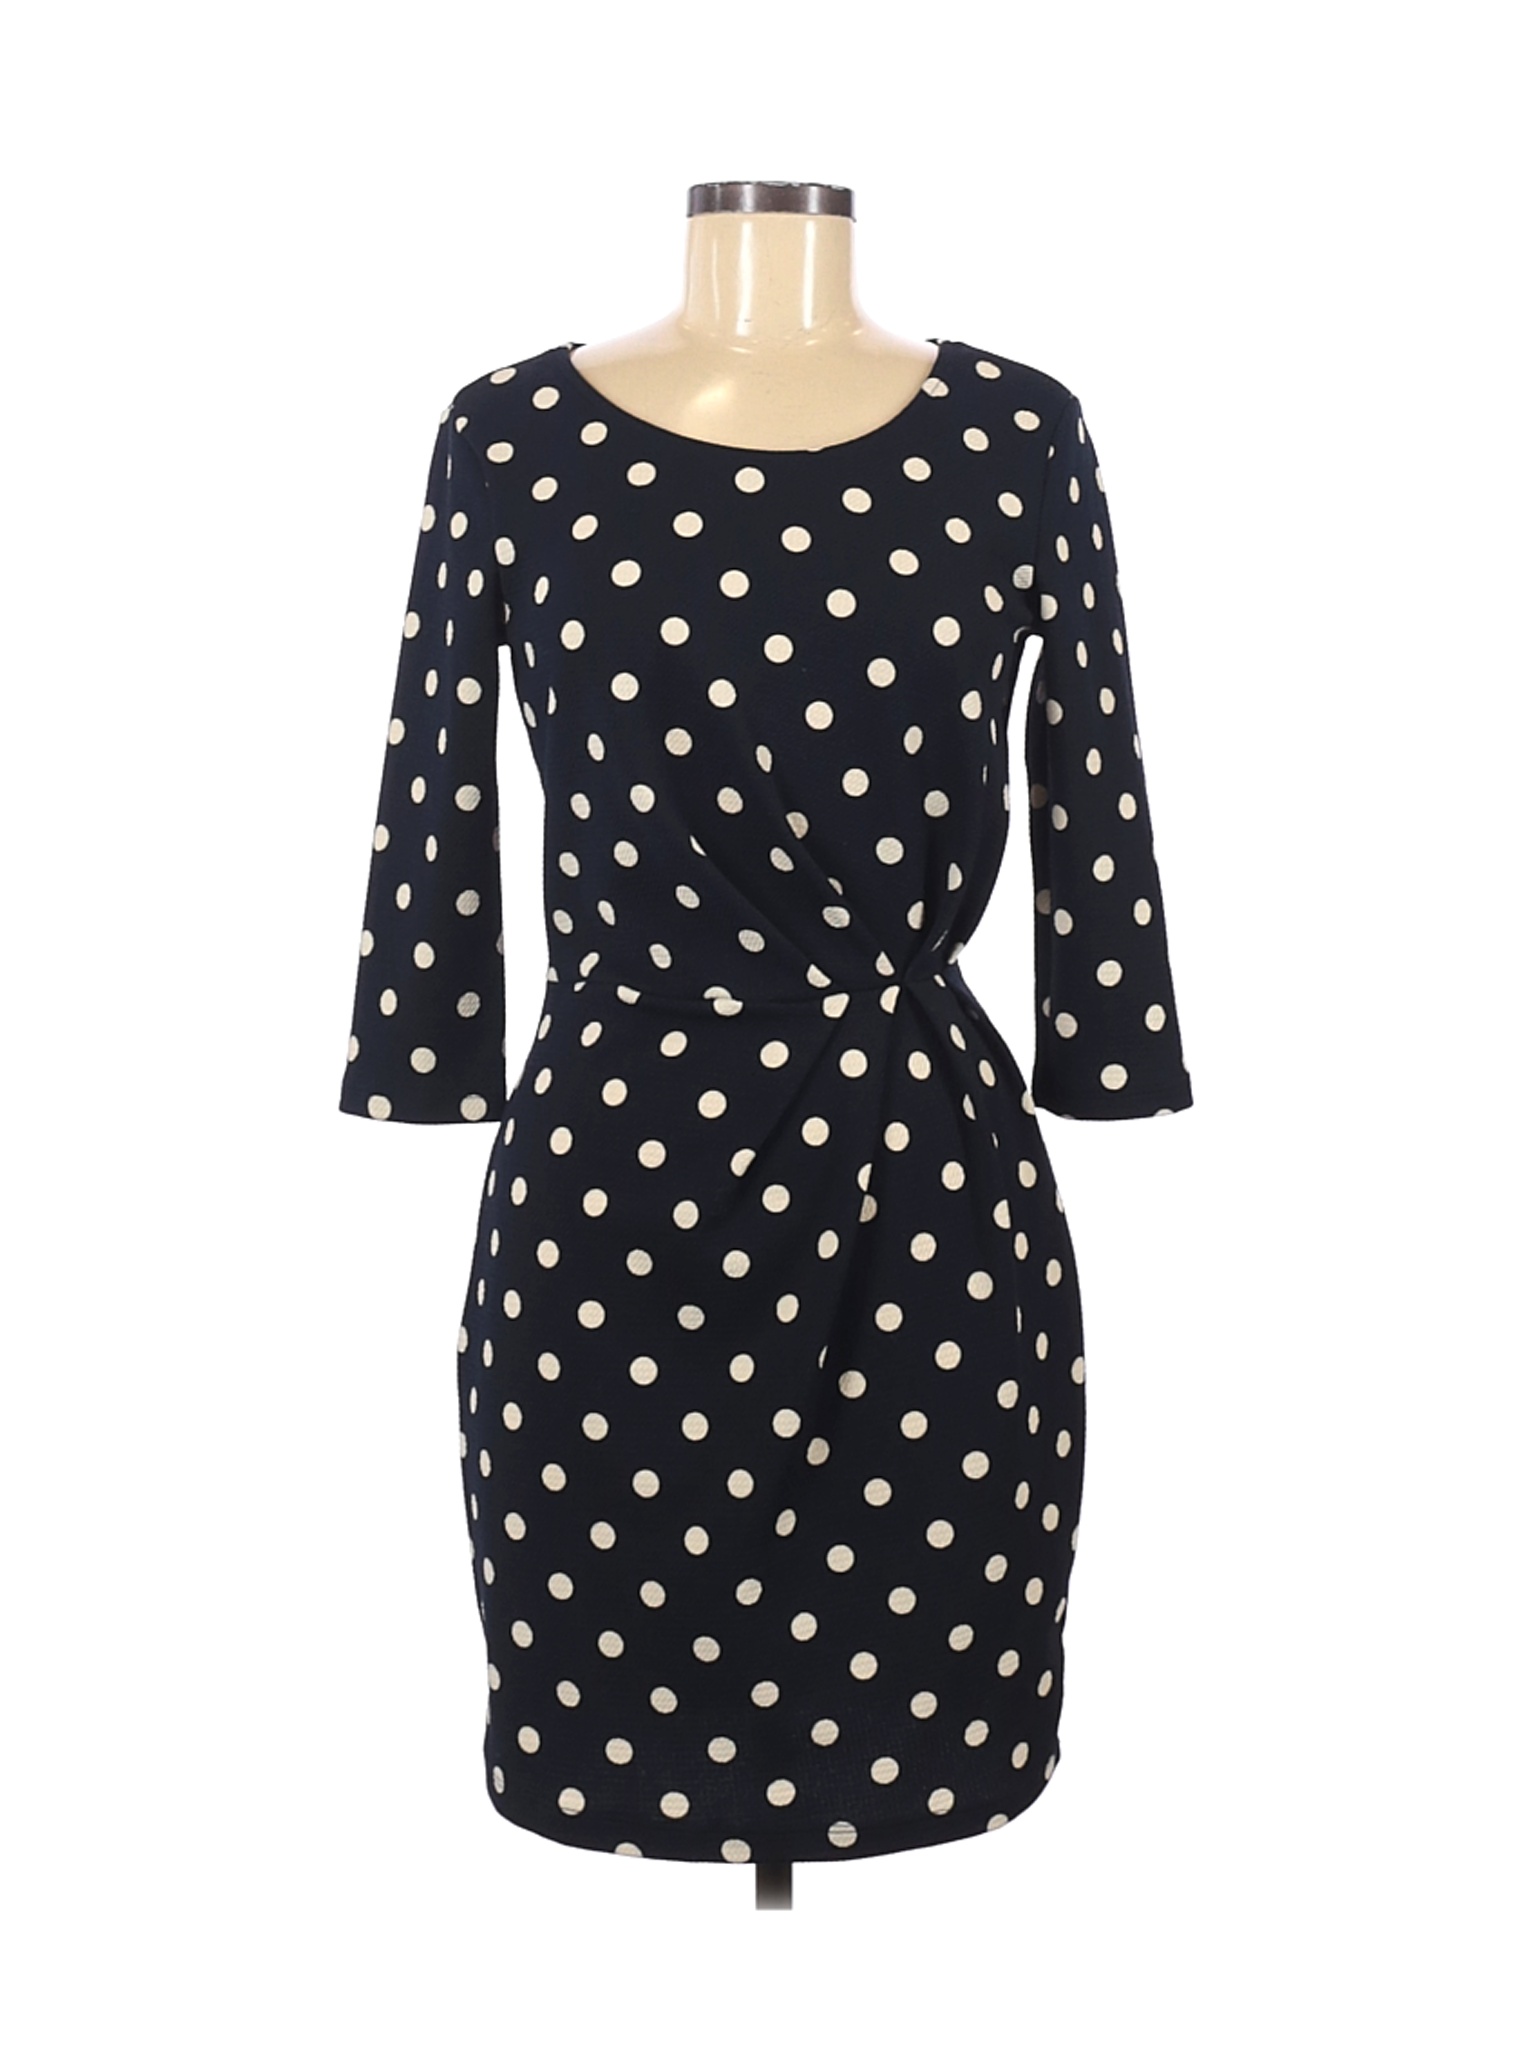 Le Lis Women Black Casual Dress S | eBay